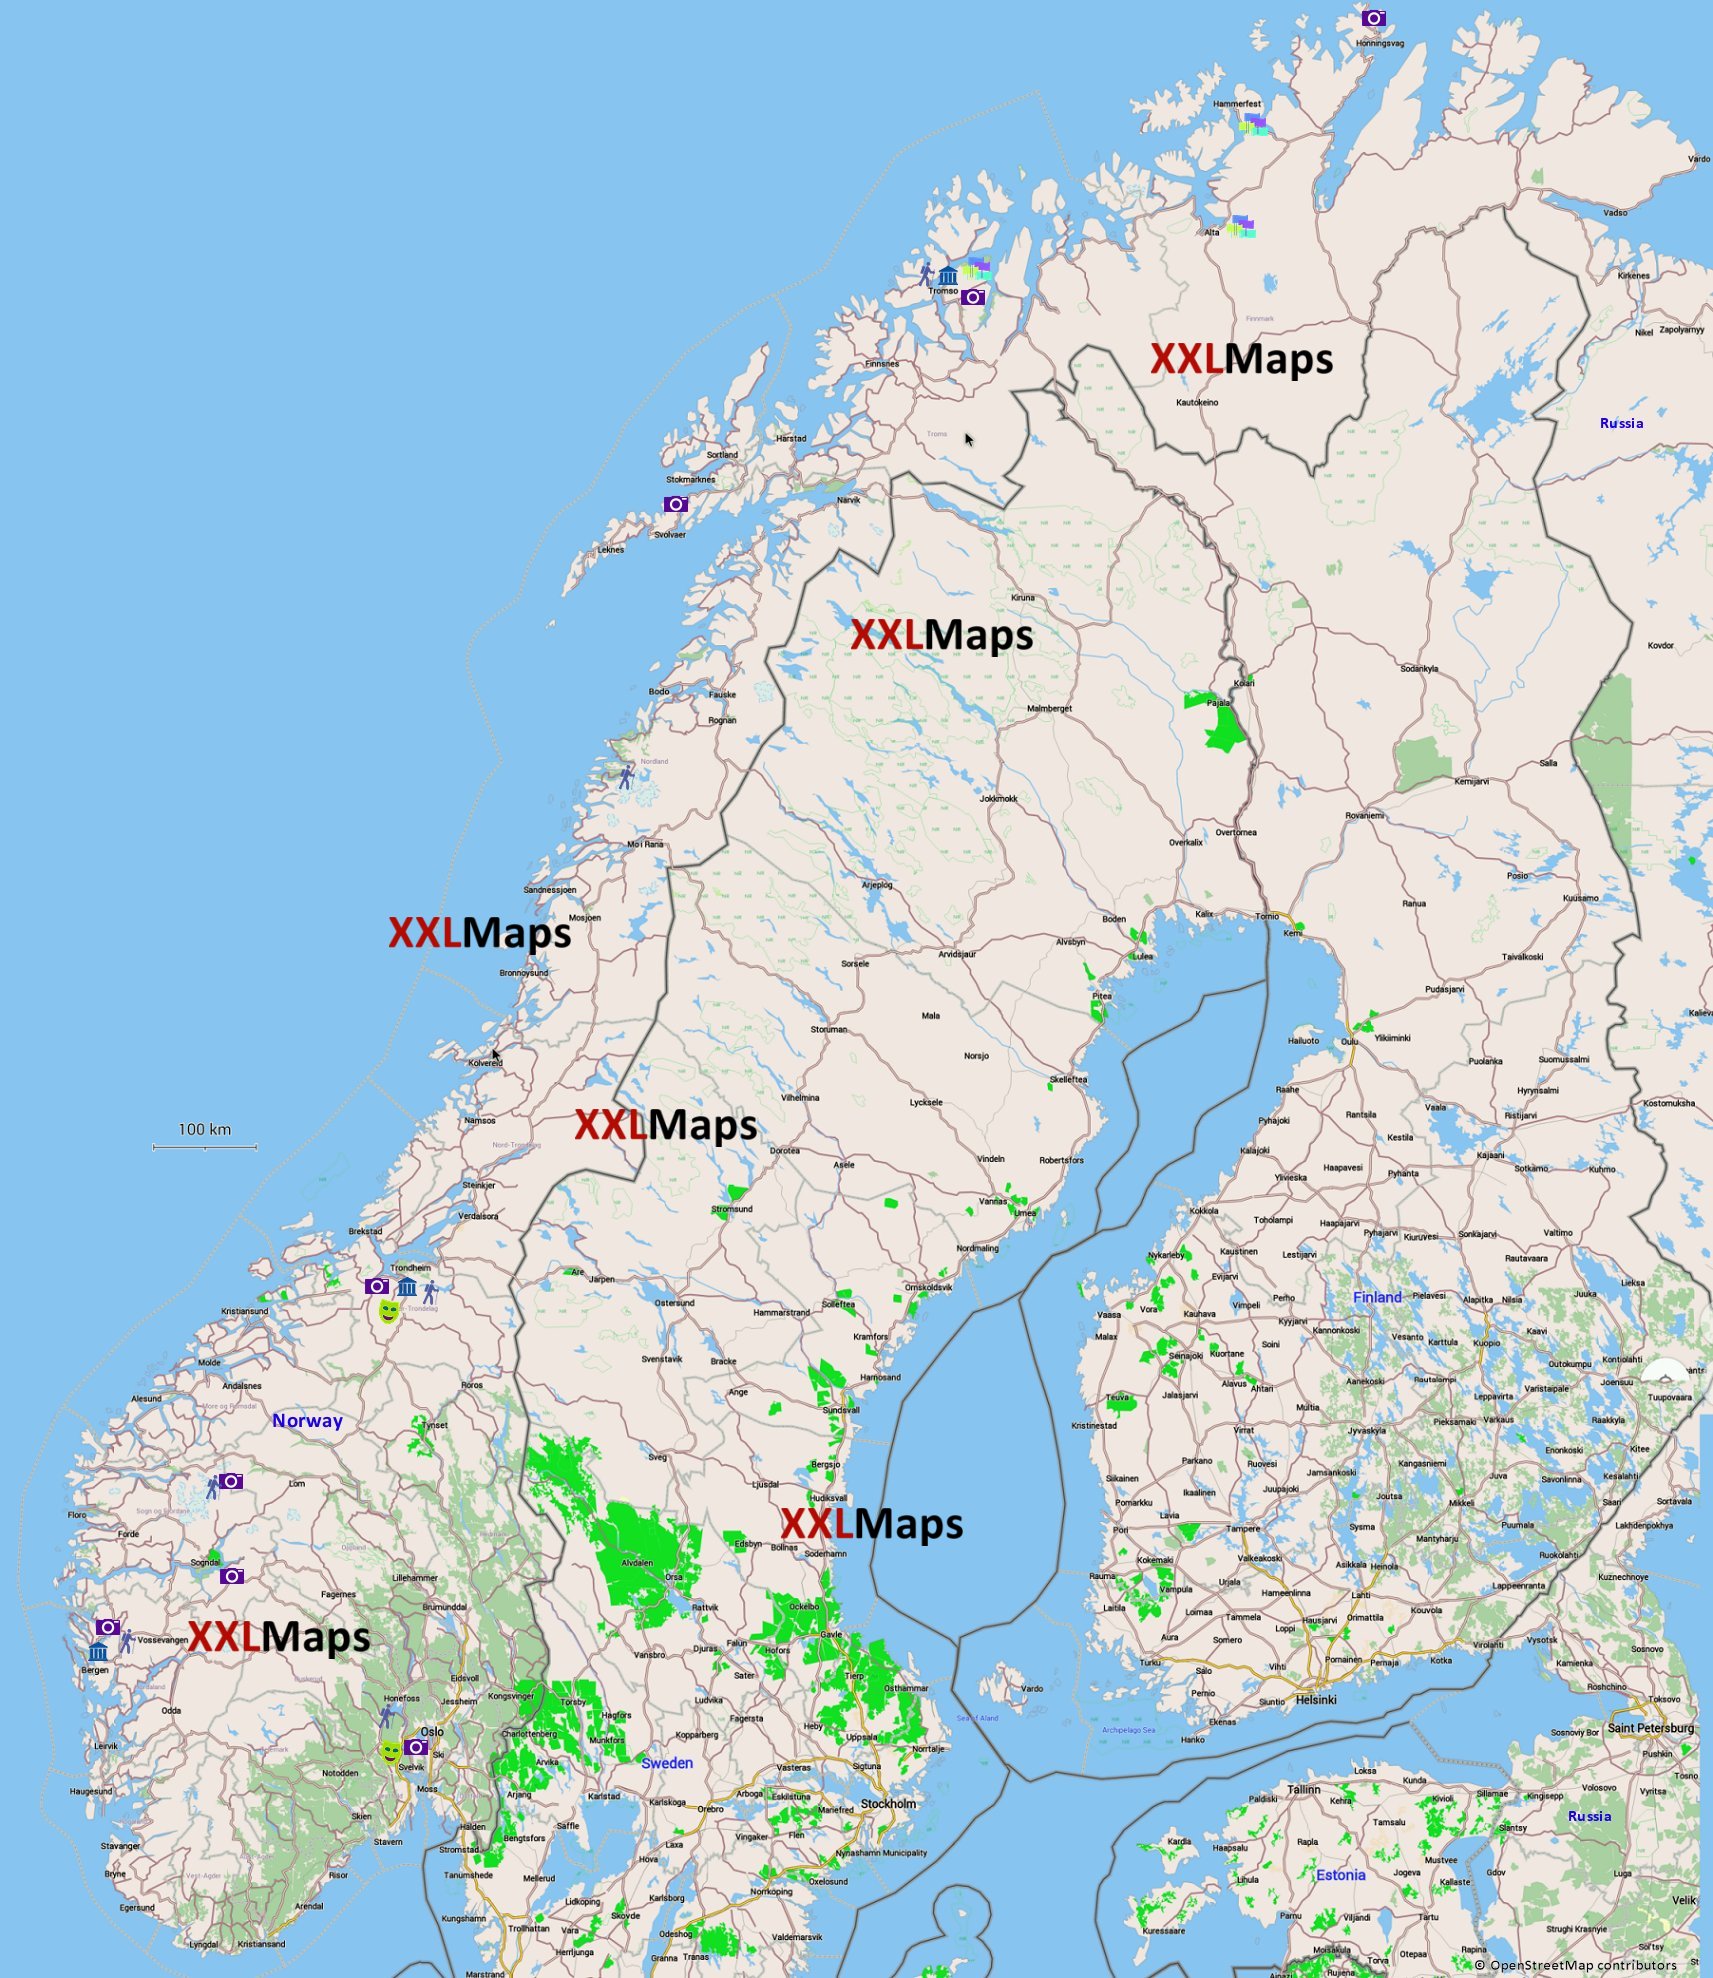 Turist kart over Norge